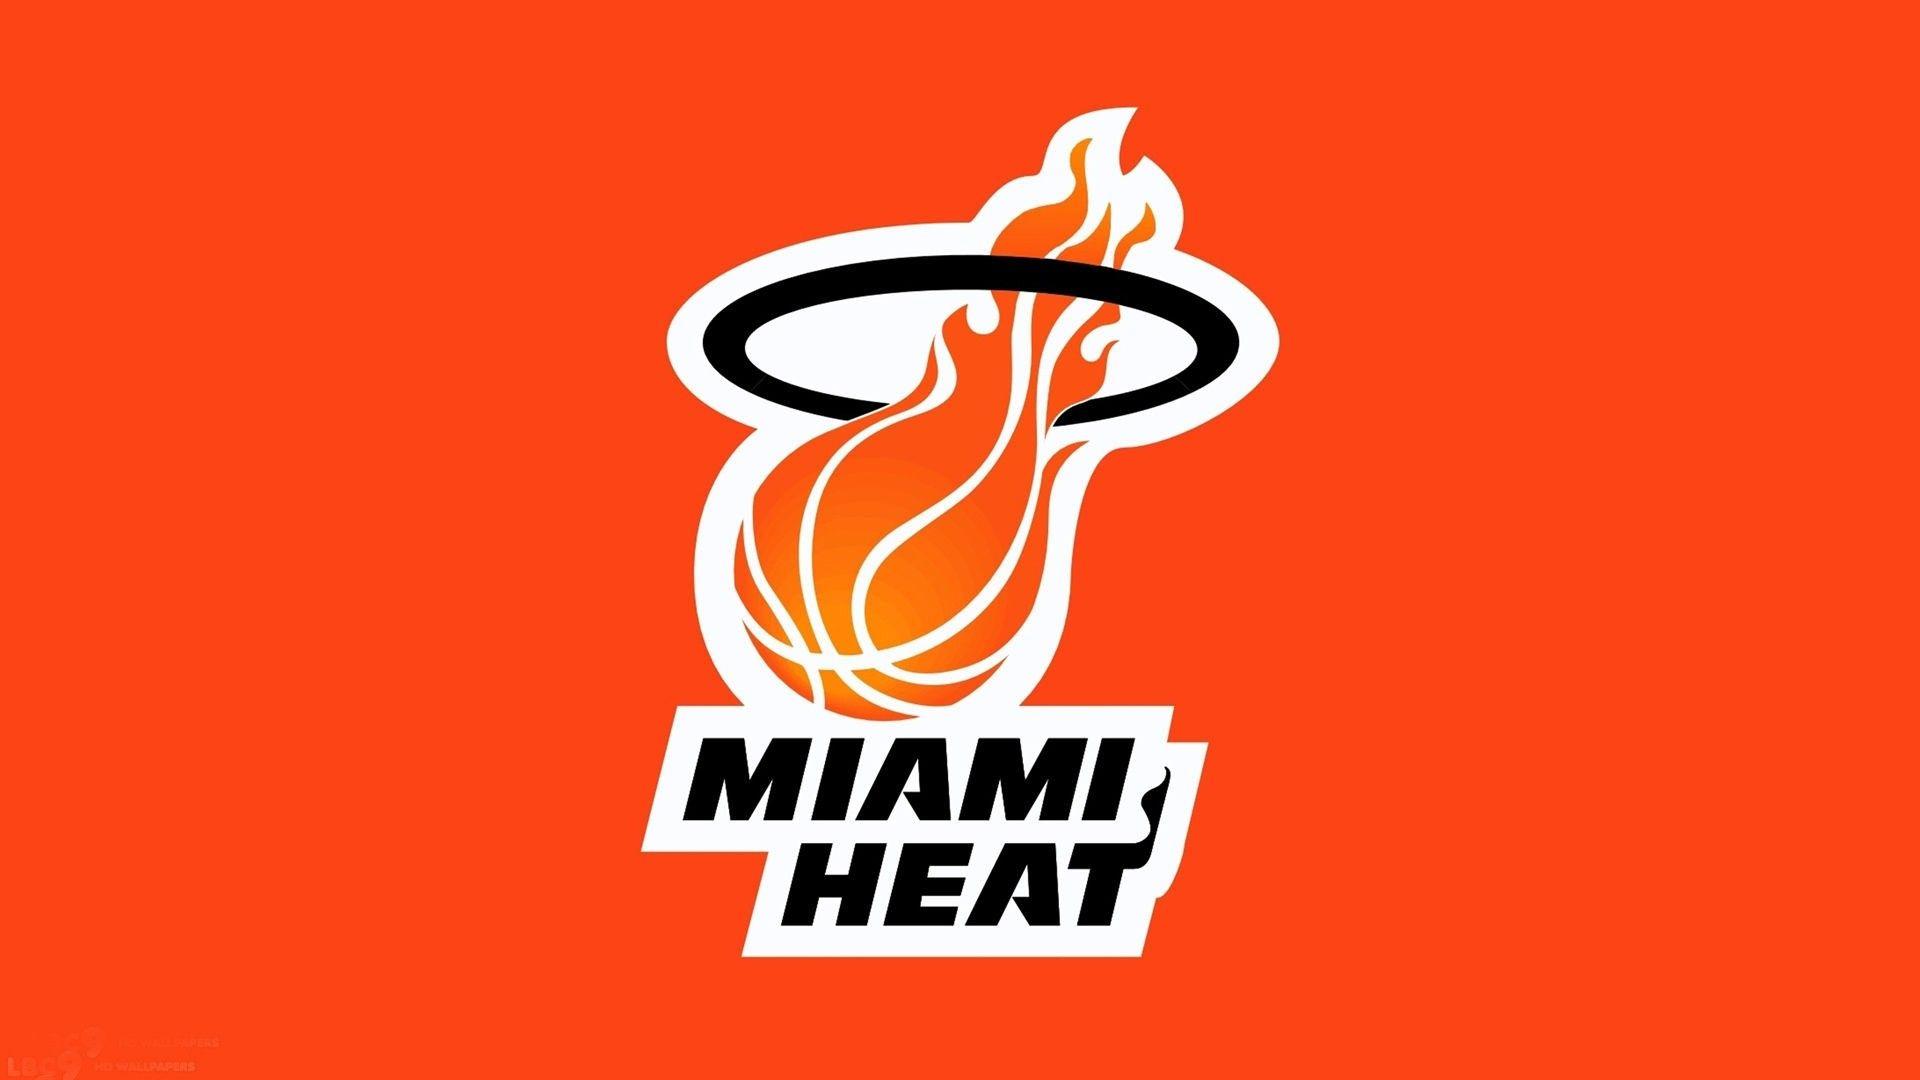 1920X1080 Miami Heat Wallpapers - Top Free 1920X1080 Miami Heat ...